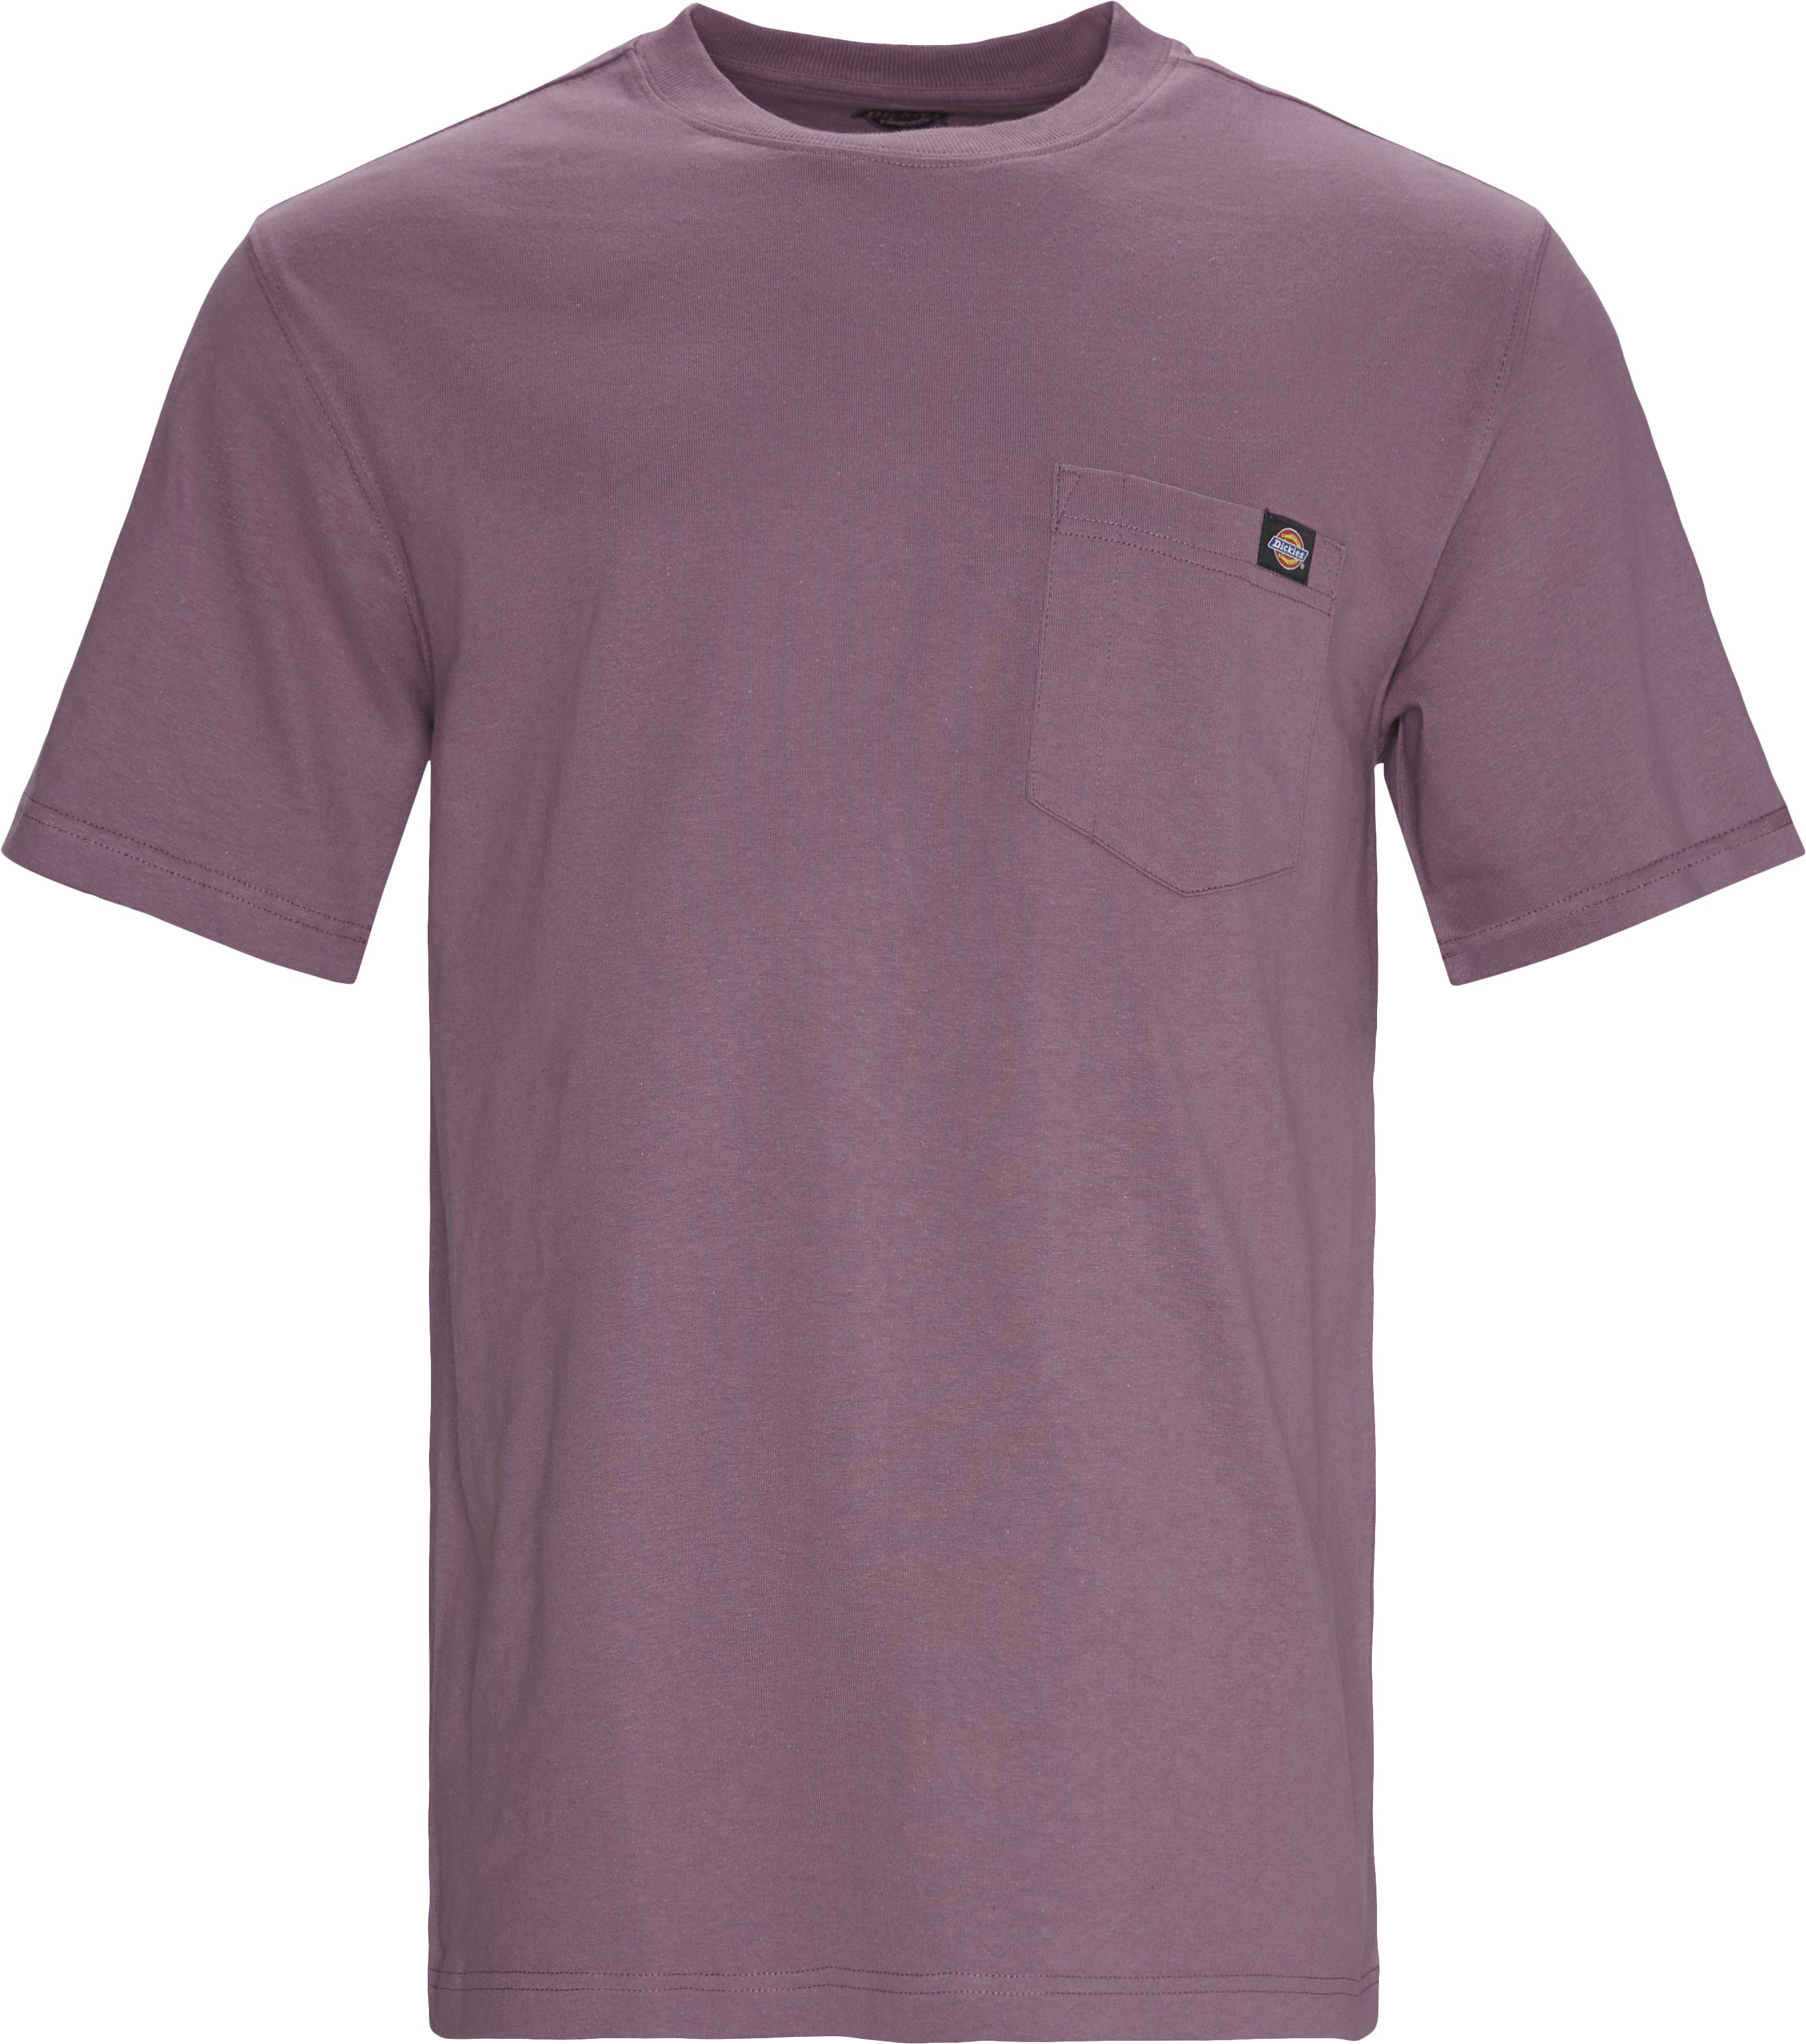 Porterdale Tee - T-shirts - Regular fit - Lilac